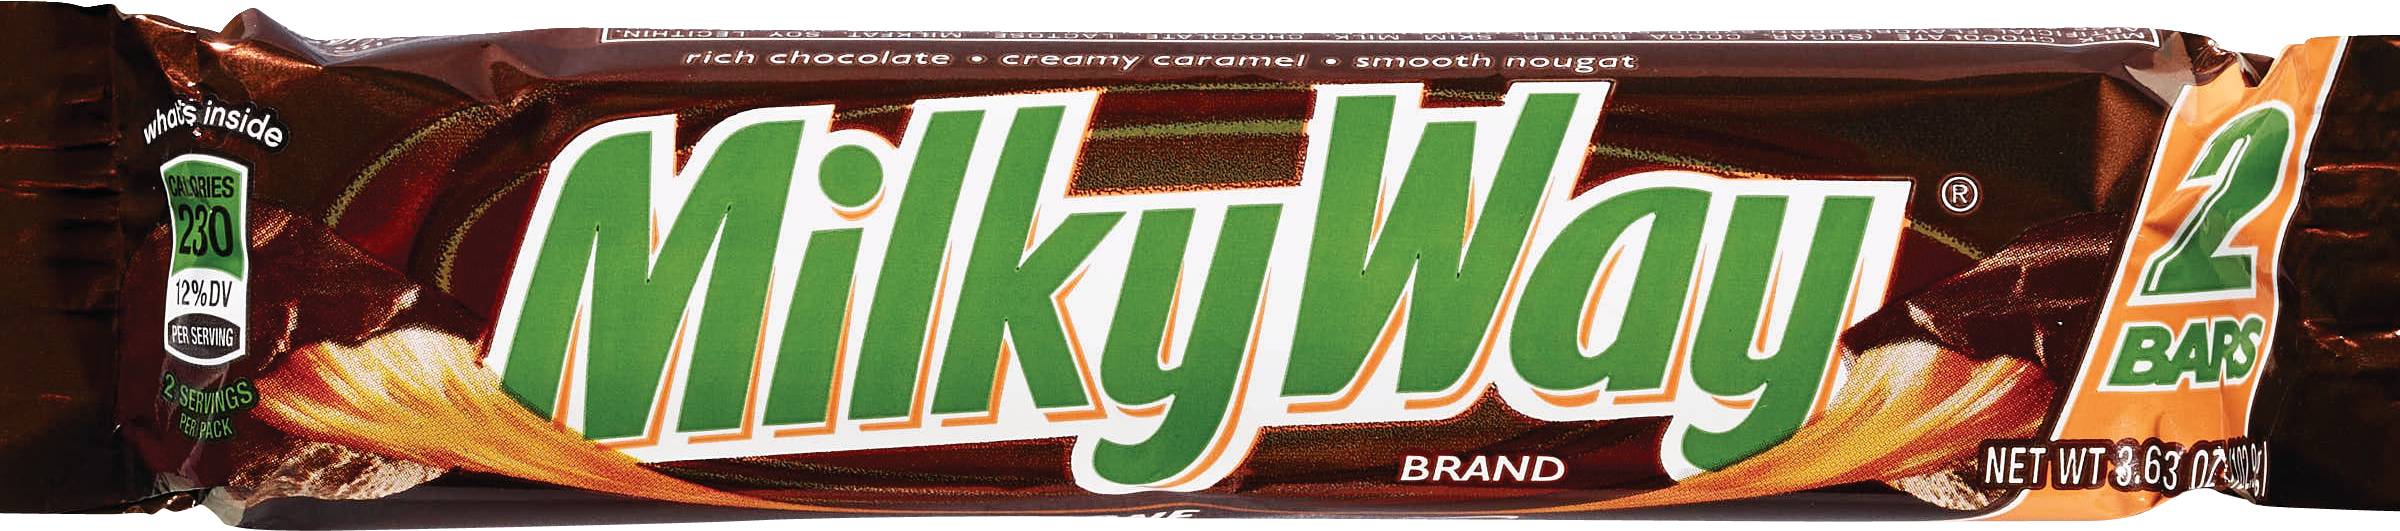 Milky Way Milk Chocolate ToGo Sharing Size Candy Bar, 3.63 oz